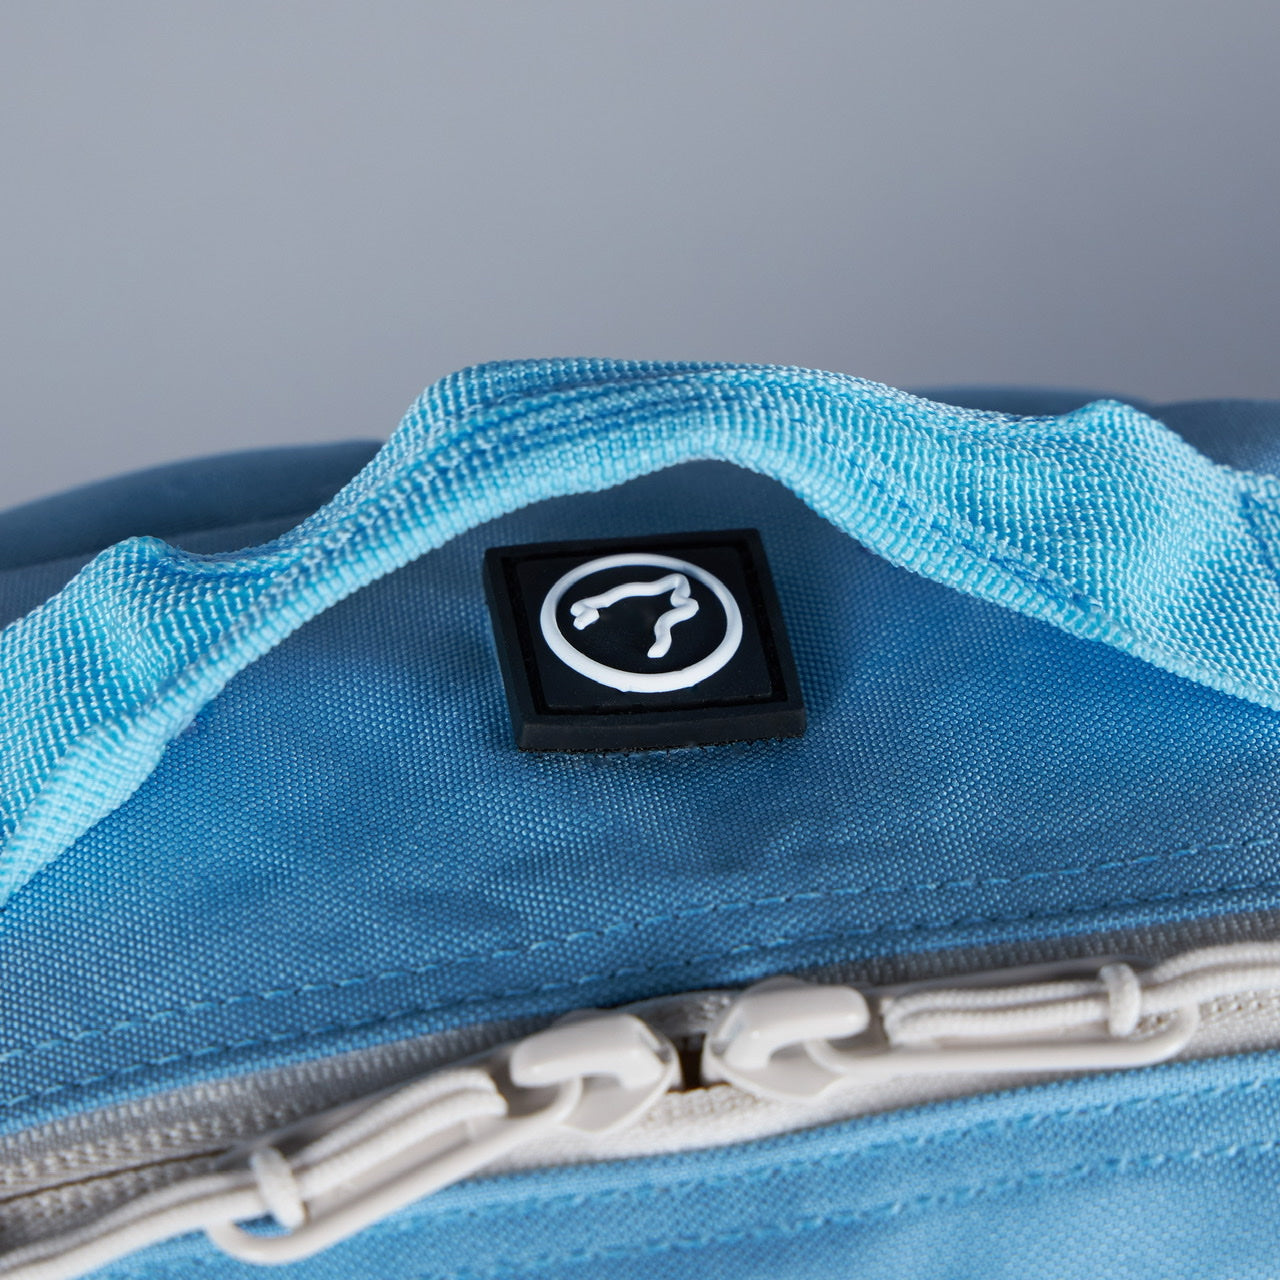 9L Backpack Mini Built Blue